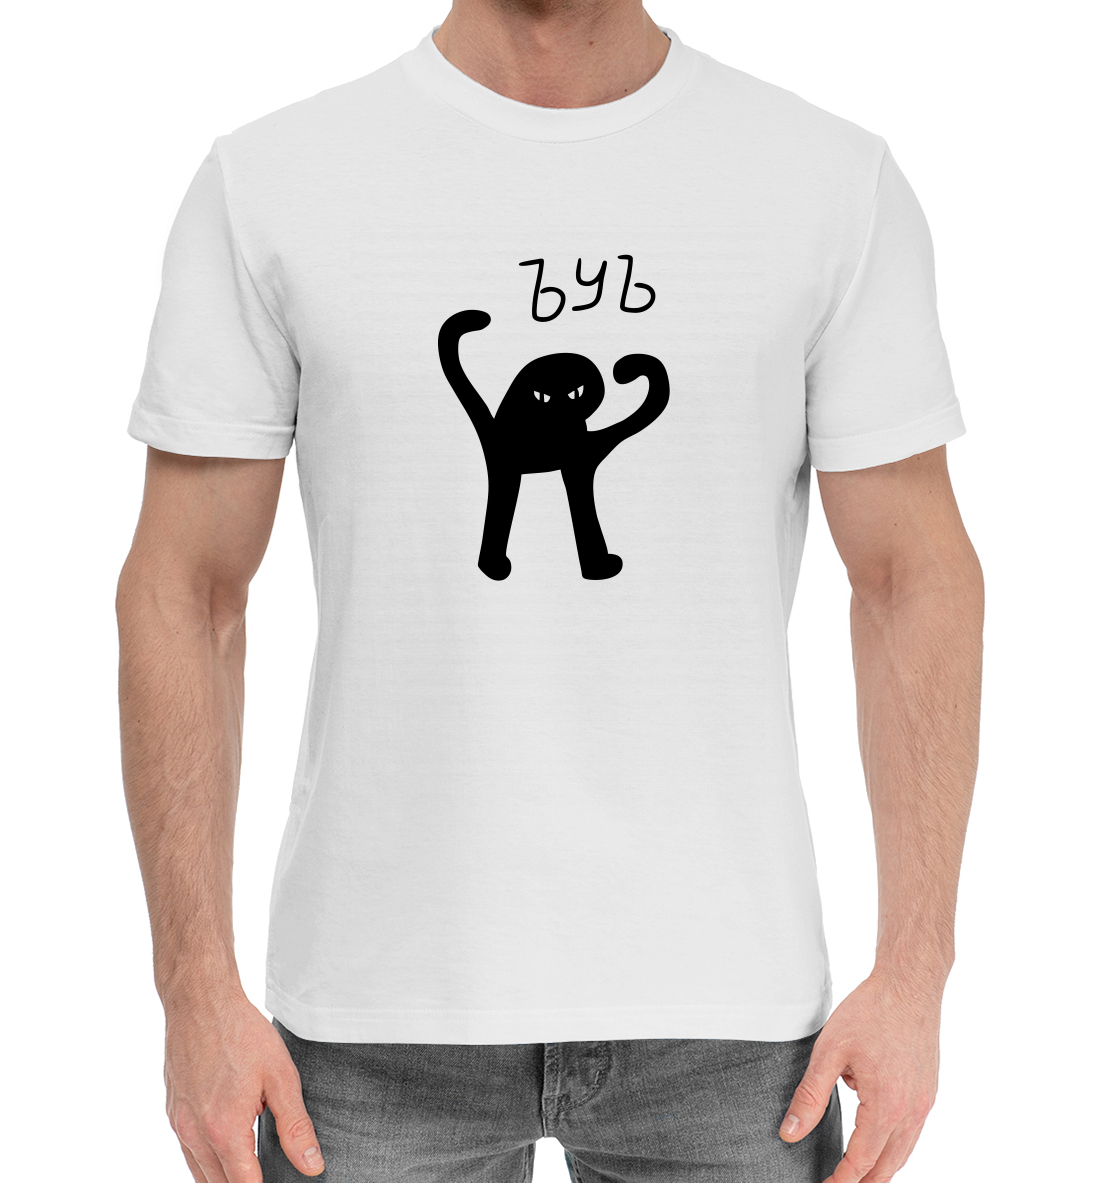 Мужская Хлопковая футболка с надписью ЪУЪ, артикул MEM-793871-hfu-2mp